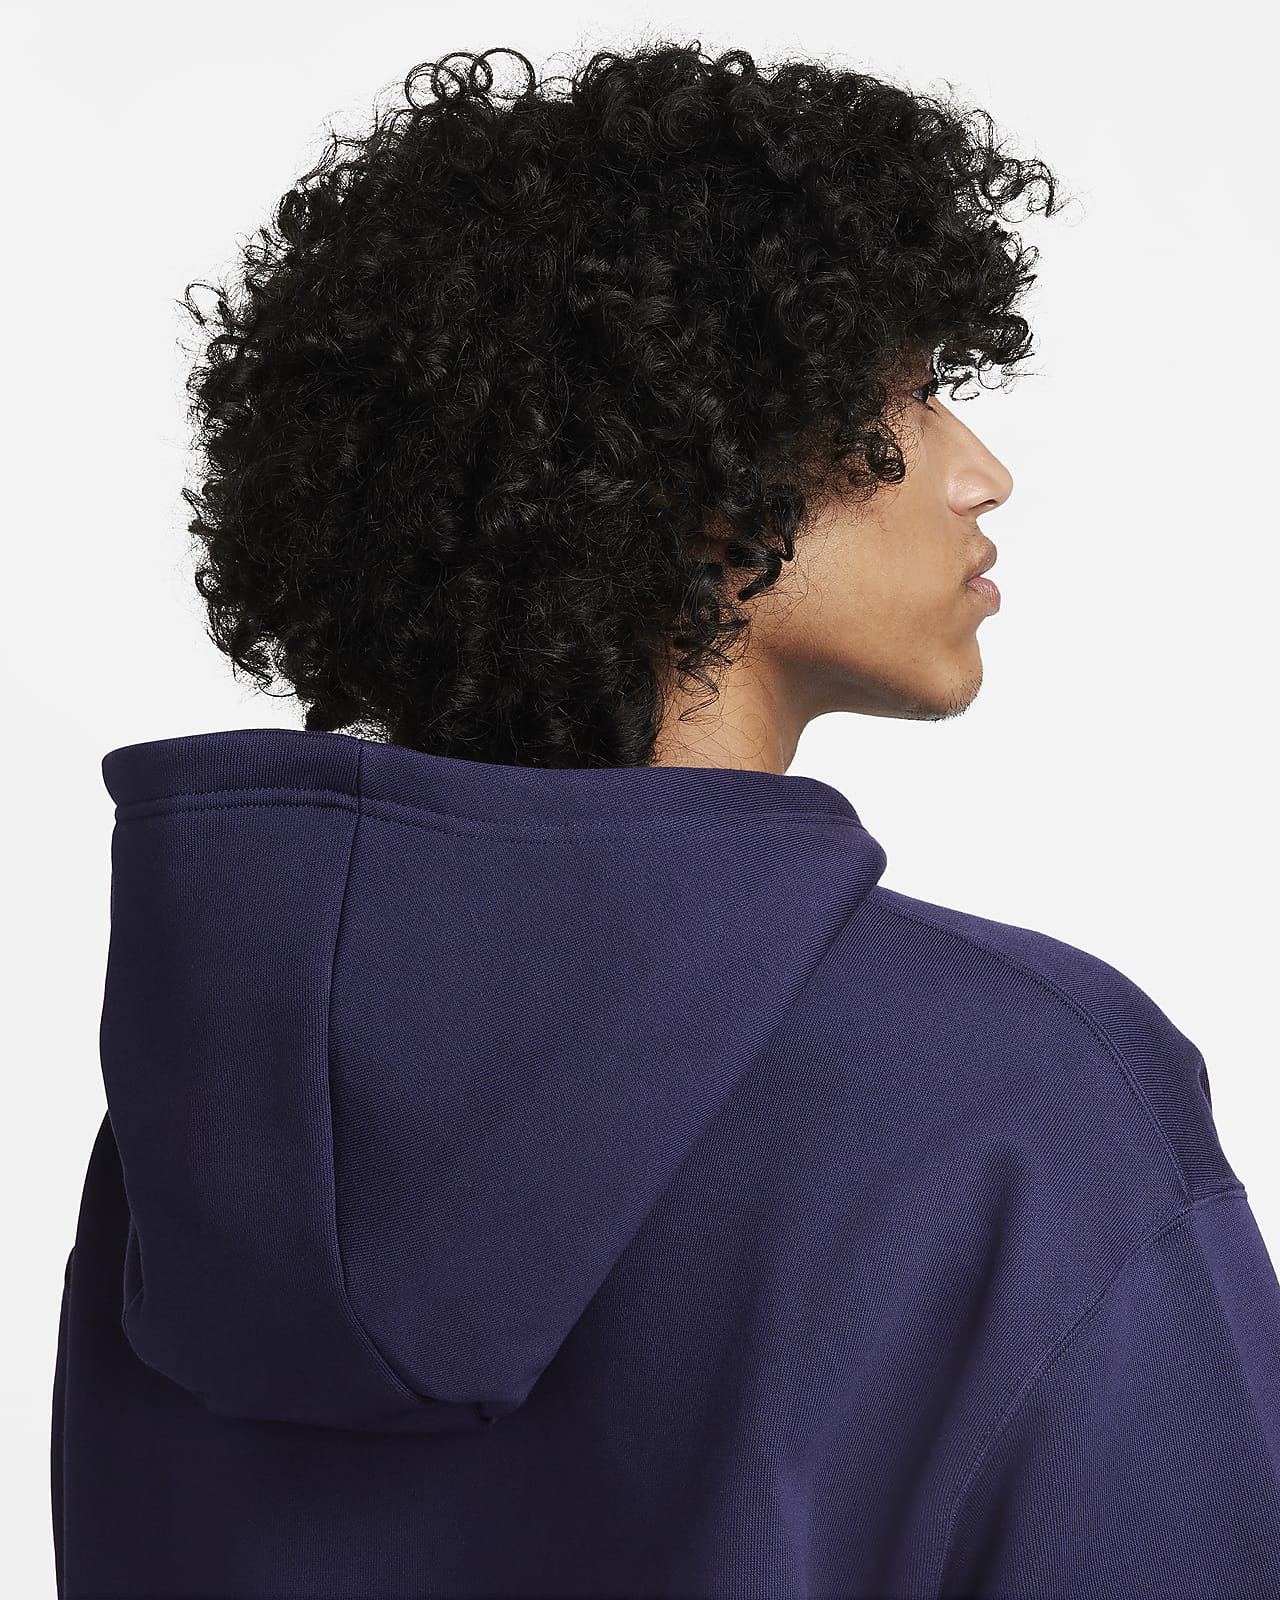 Nike ACG Sweater Womens Medium Blue Fleece Full Zip Outdoors